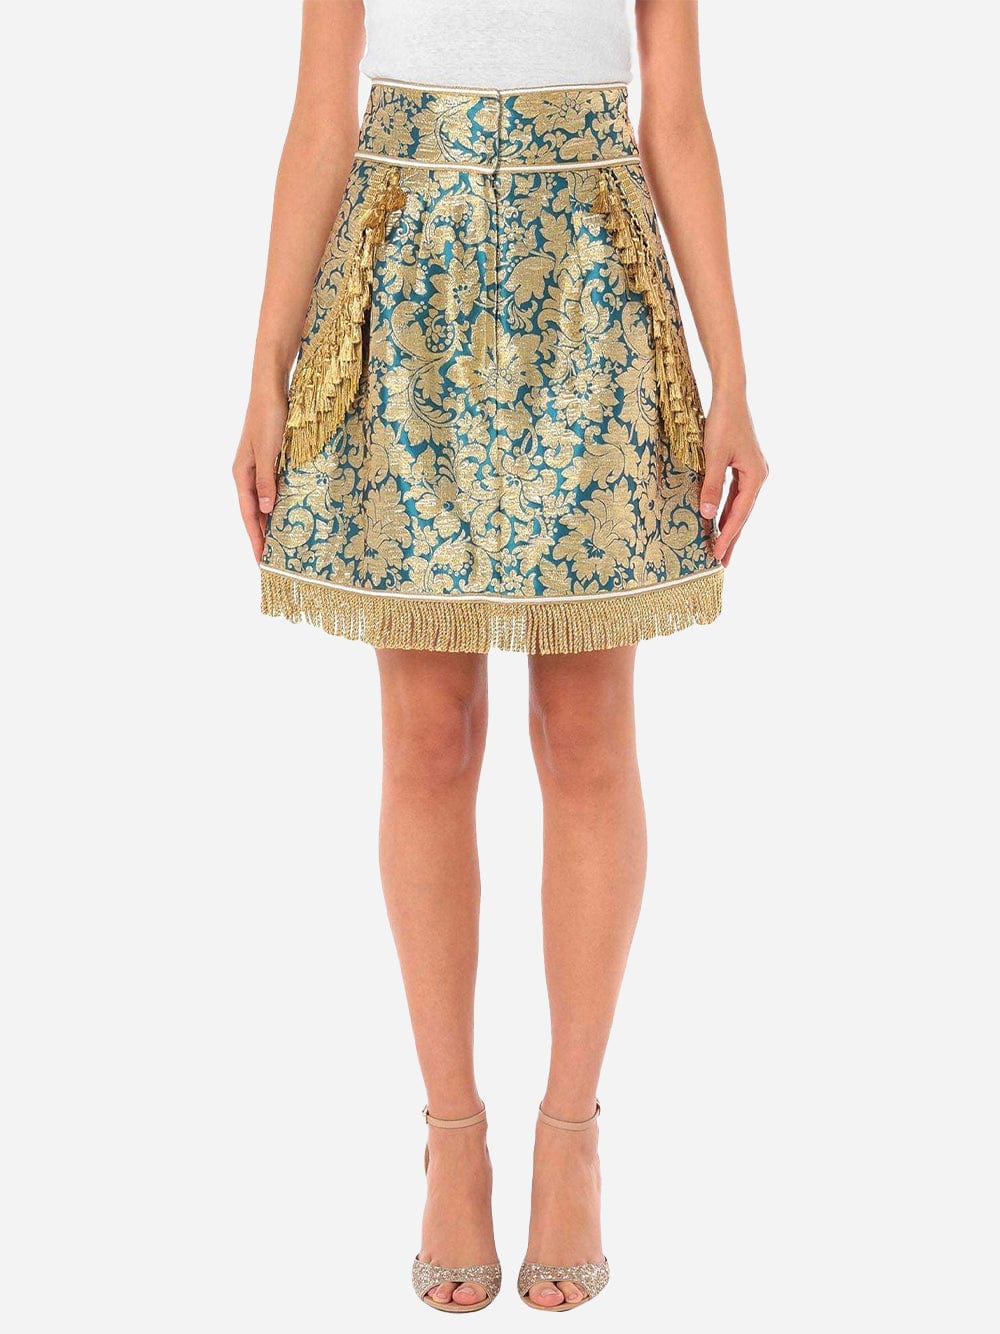 Dolce & Gabbana Brocade Tassel Skirt